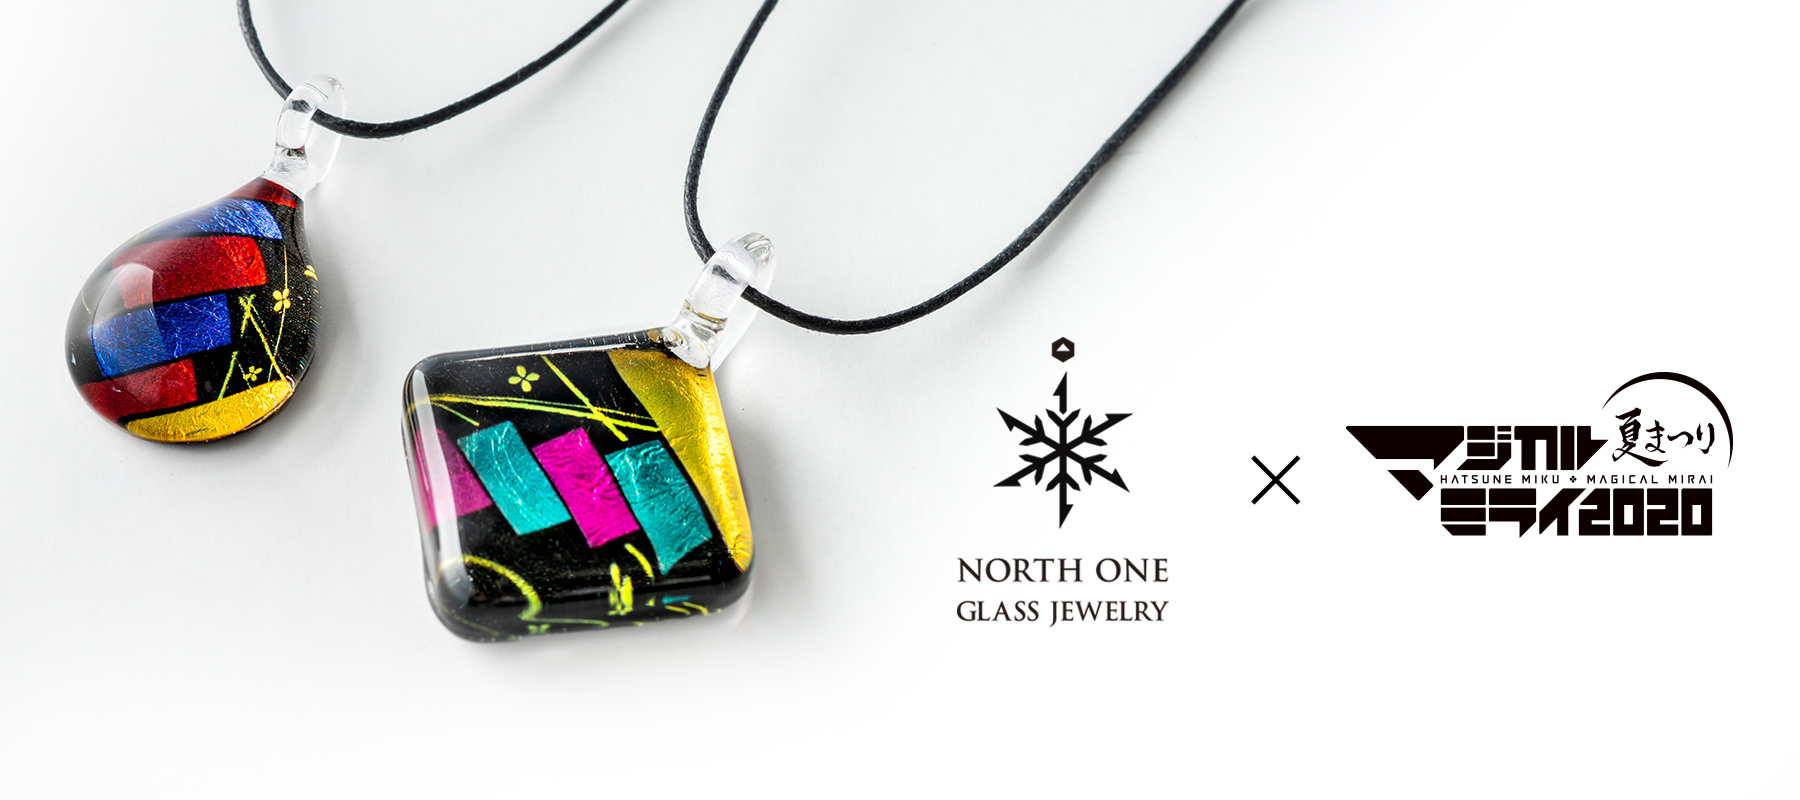 North One Glass Jewelry ノースワン グラスジュエリー